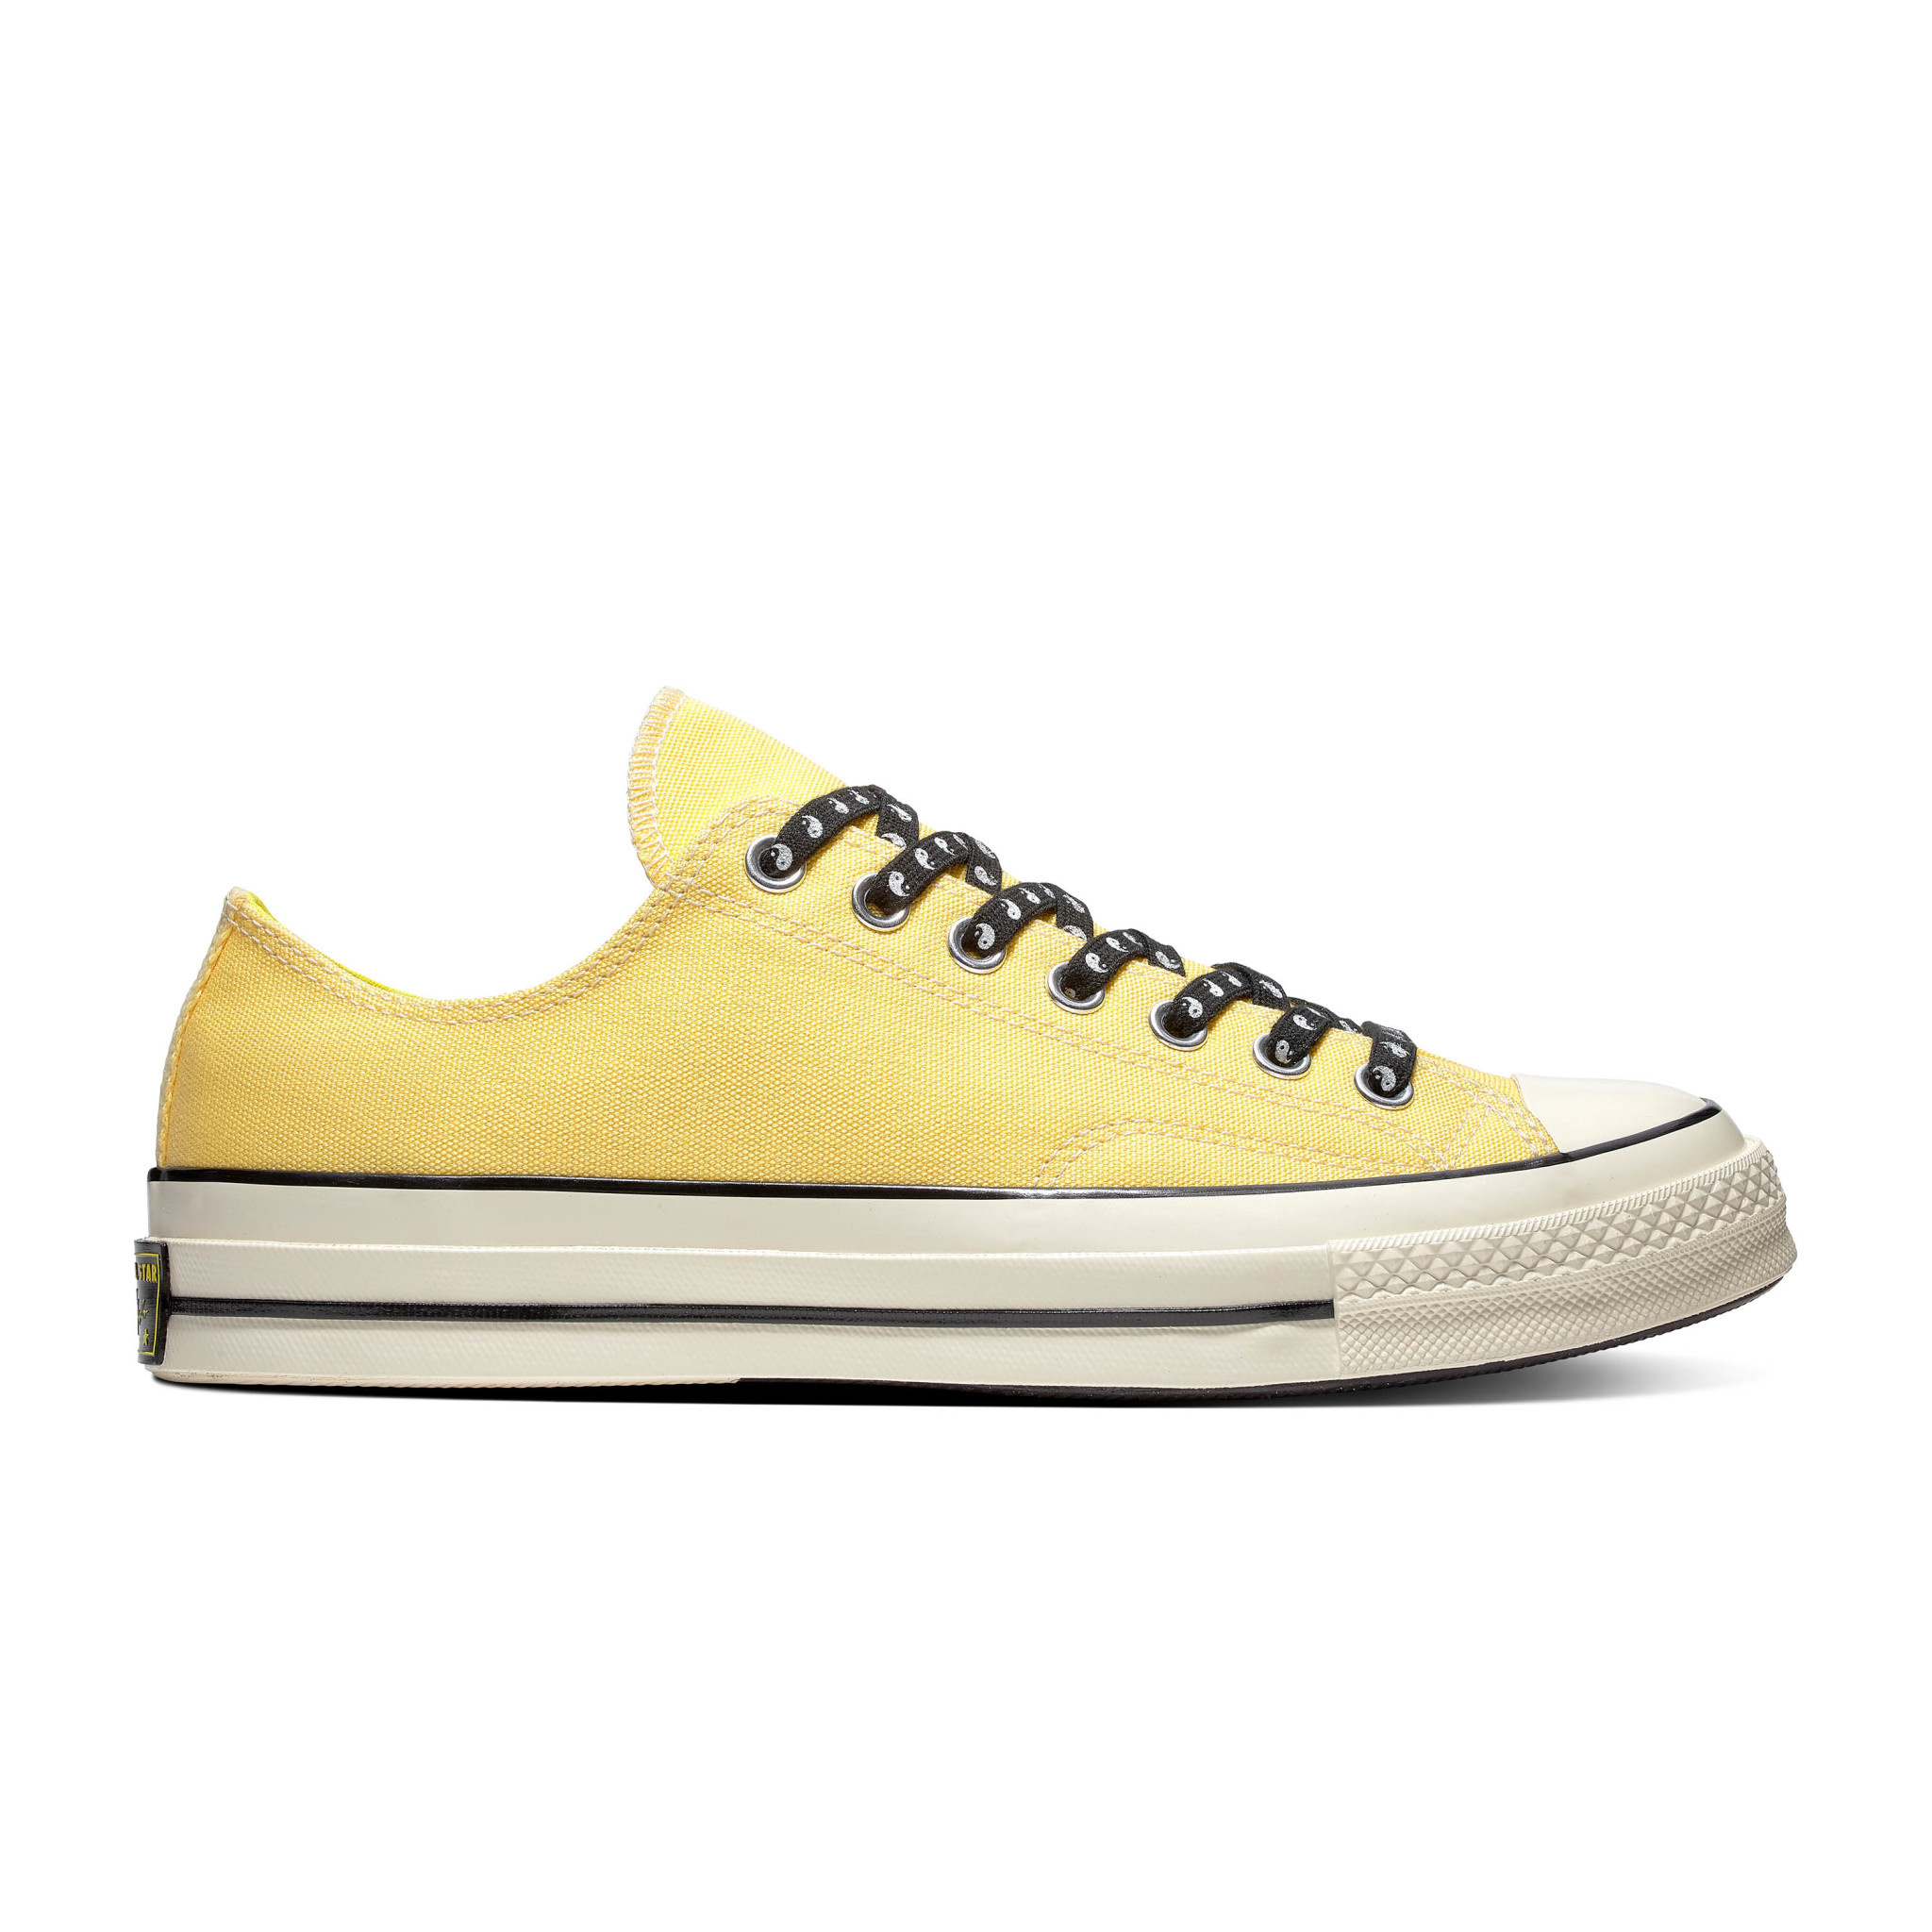 yellow converse 70